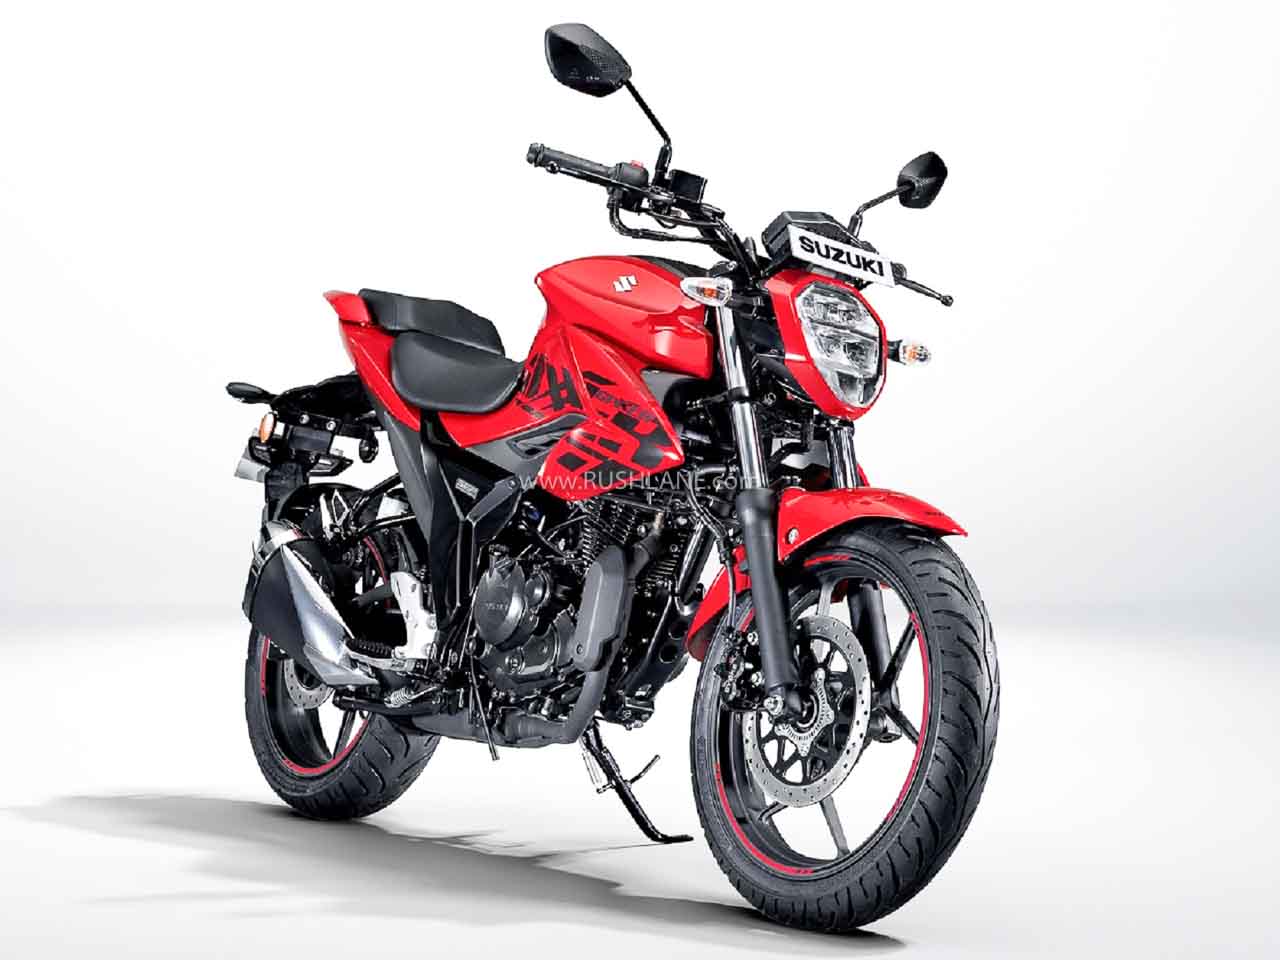 2020 Suzuki GSX-R750 MC Commute Review | Motorcycle News